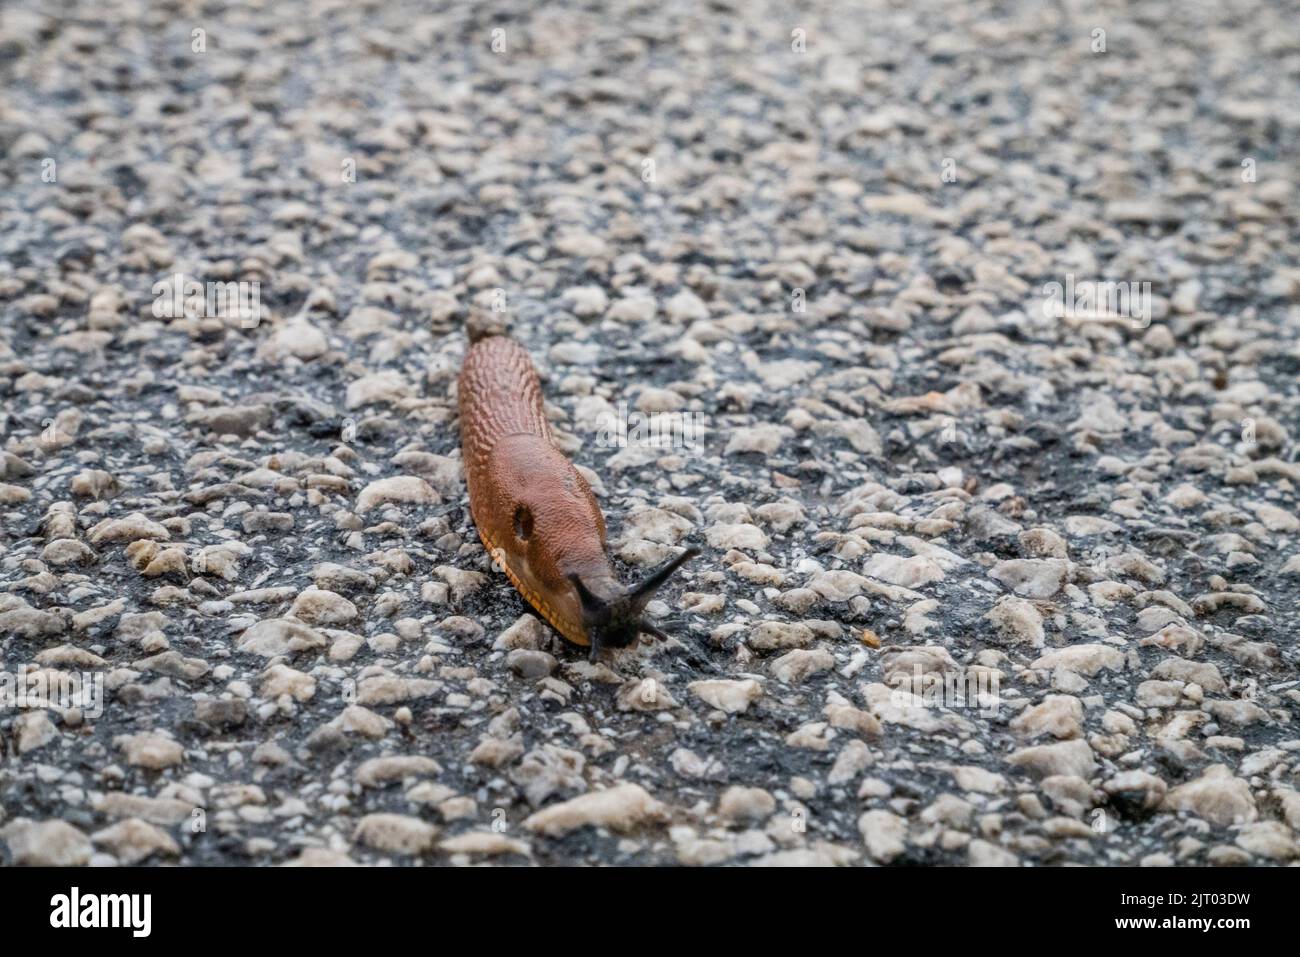 Spanish Slug (Arion lusitanicus - Arion vulgaris) or Portuguese slug as an invasive species and garden pest Stock Photo